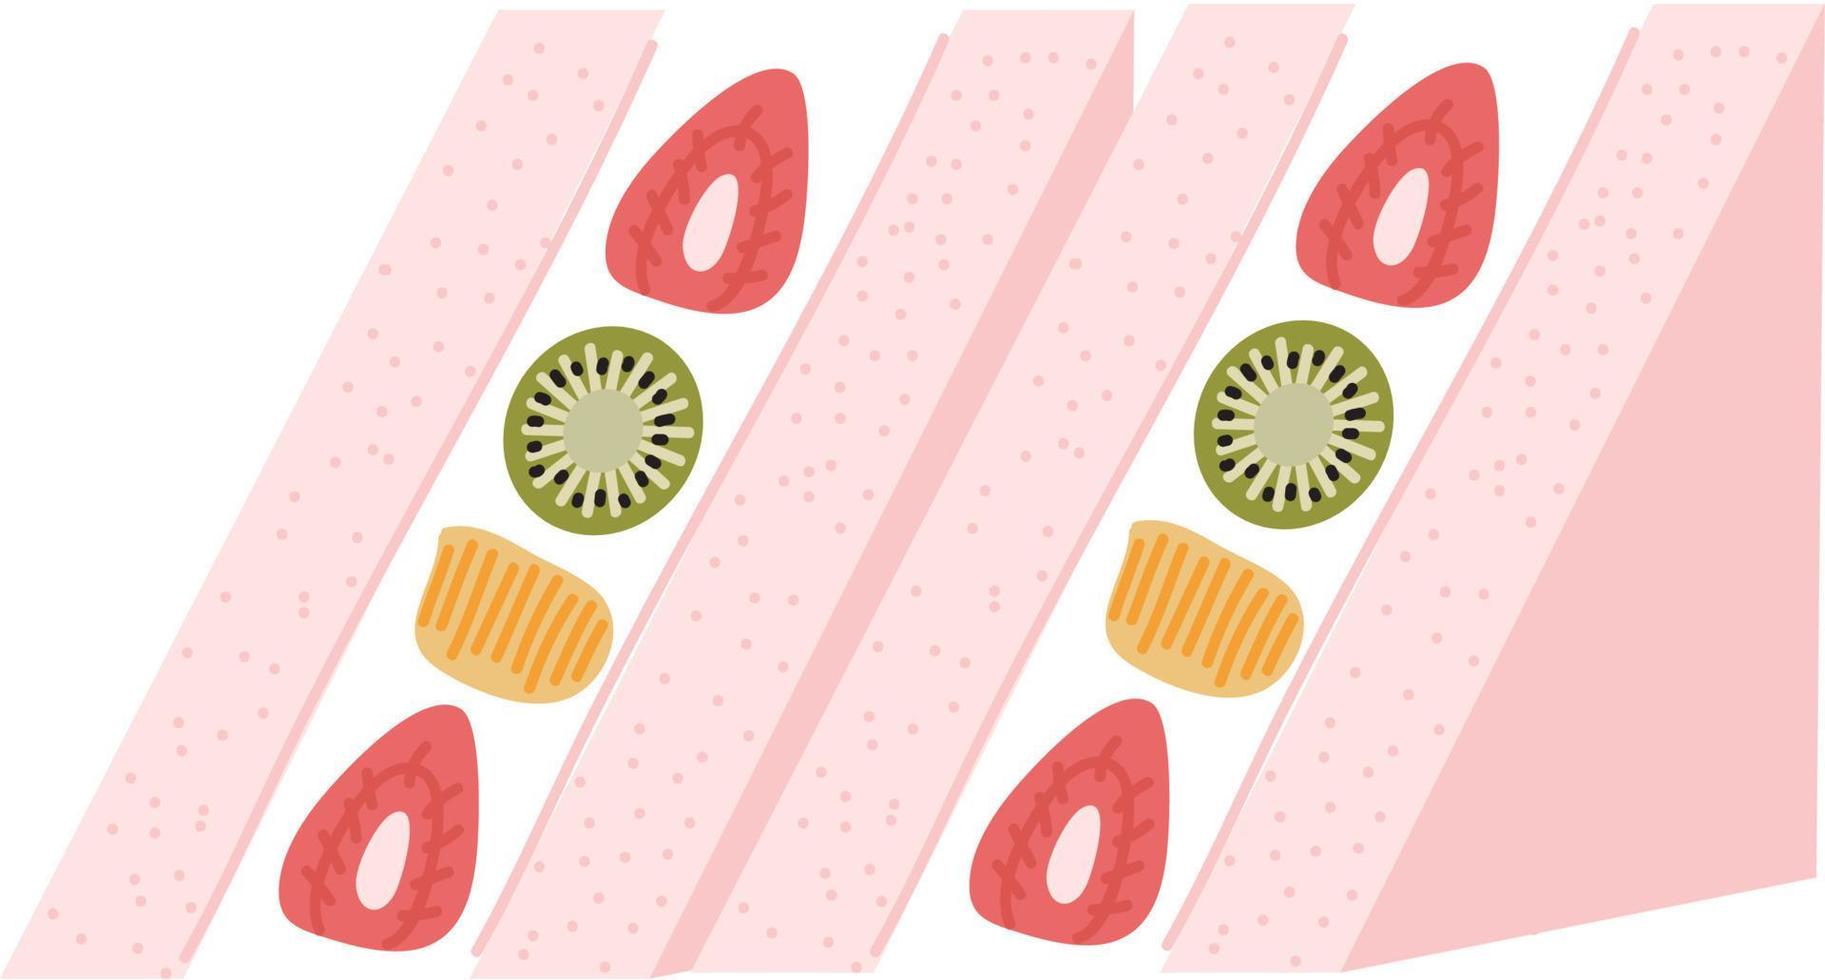 Erdbeer-Frucht-Sandwiches, Illustration im Cartoon-Stil. Logo für Cafés, Restaurants, Cafés, Catering. vektor